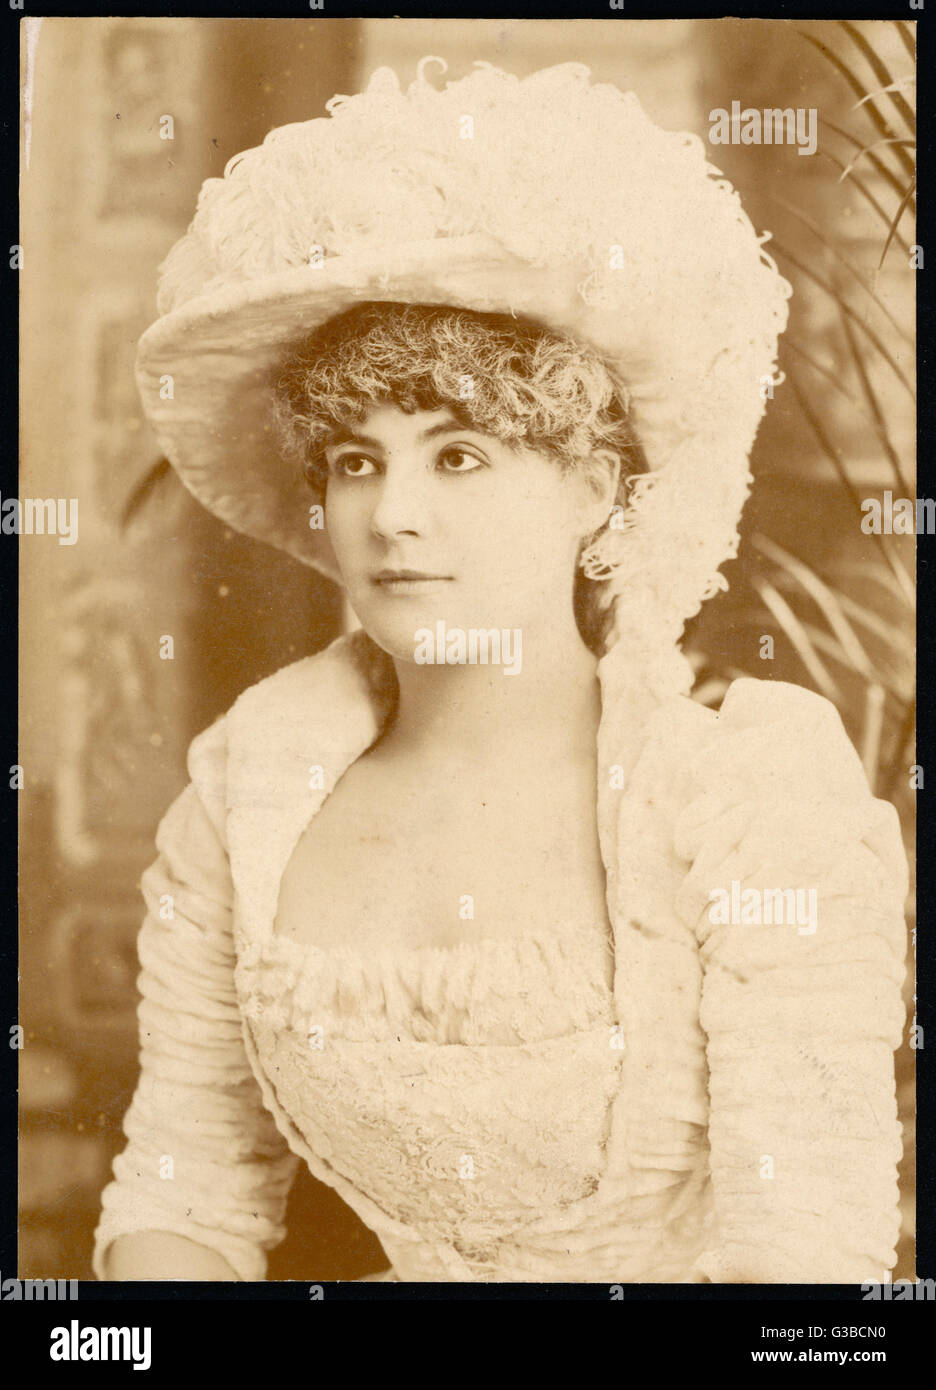 Une jeune femme victorienne en chapeau assorti et robe. Date : vers 1890  Photo Stock - Alamy